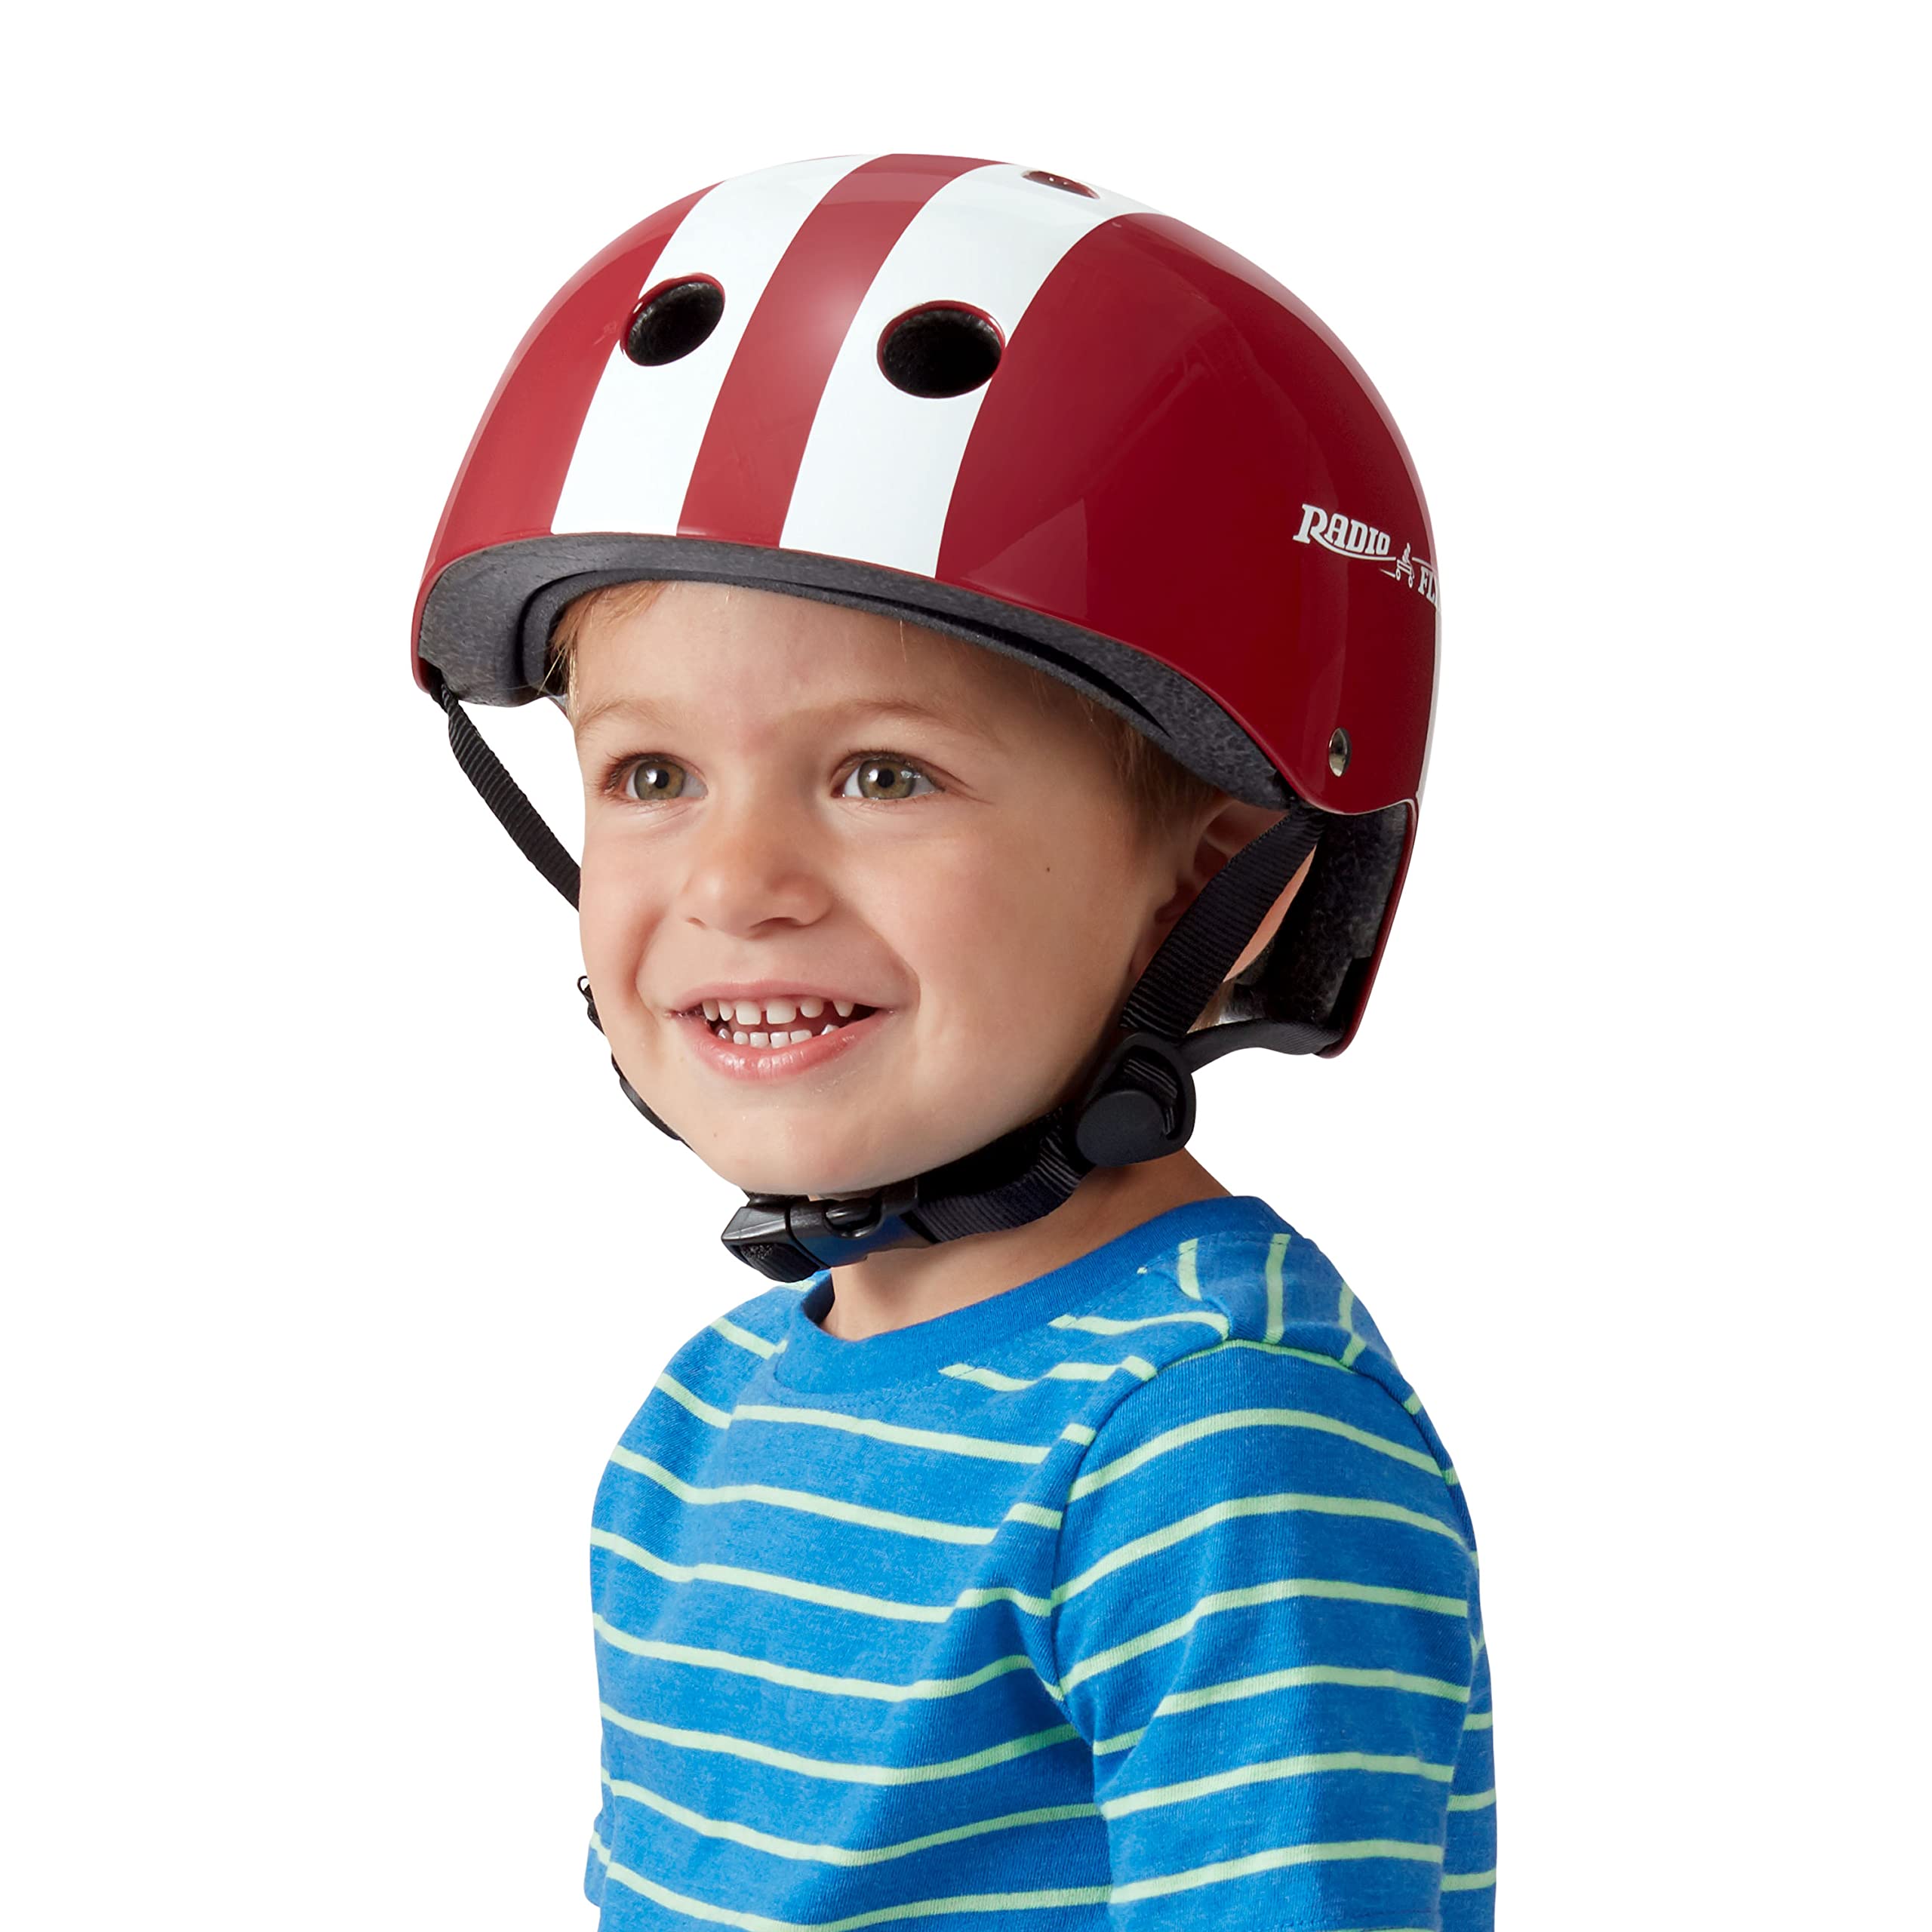 Radio Flyer Helmet, Toddler & Kids Bike Helmet For Ages 2-5, Red